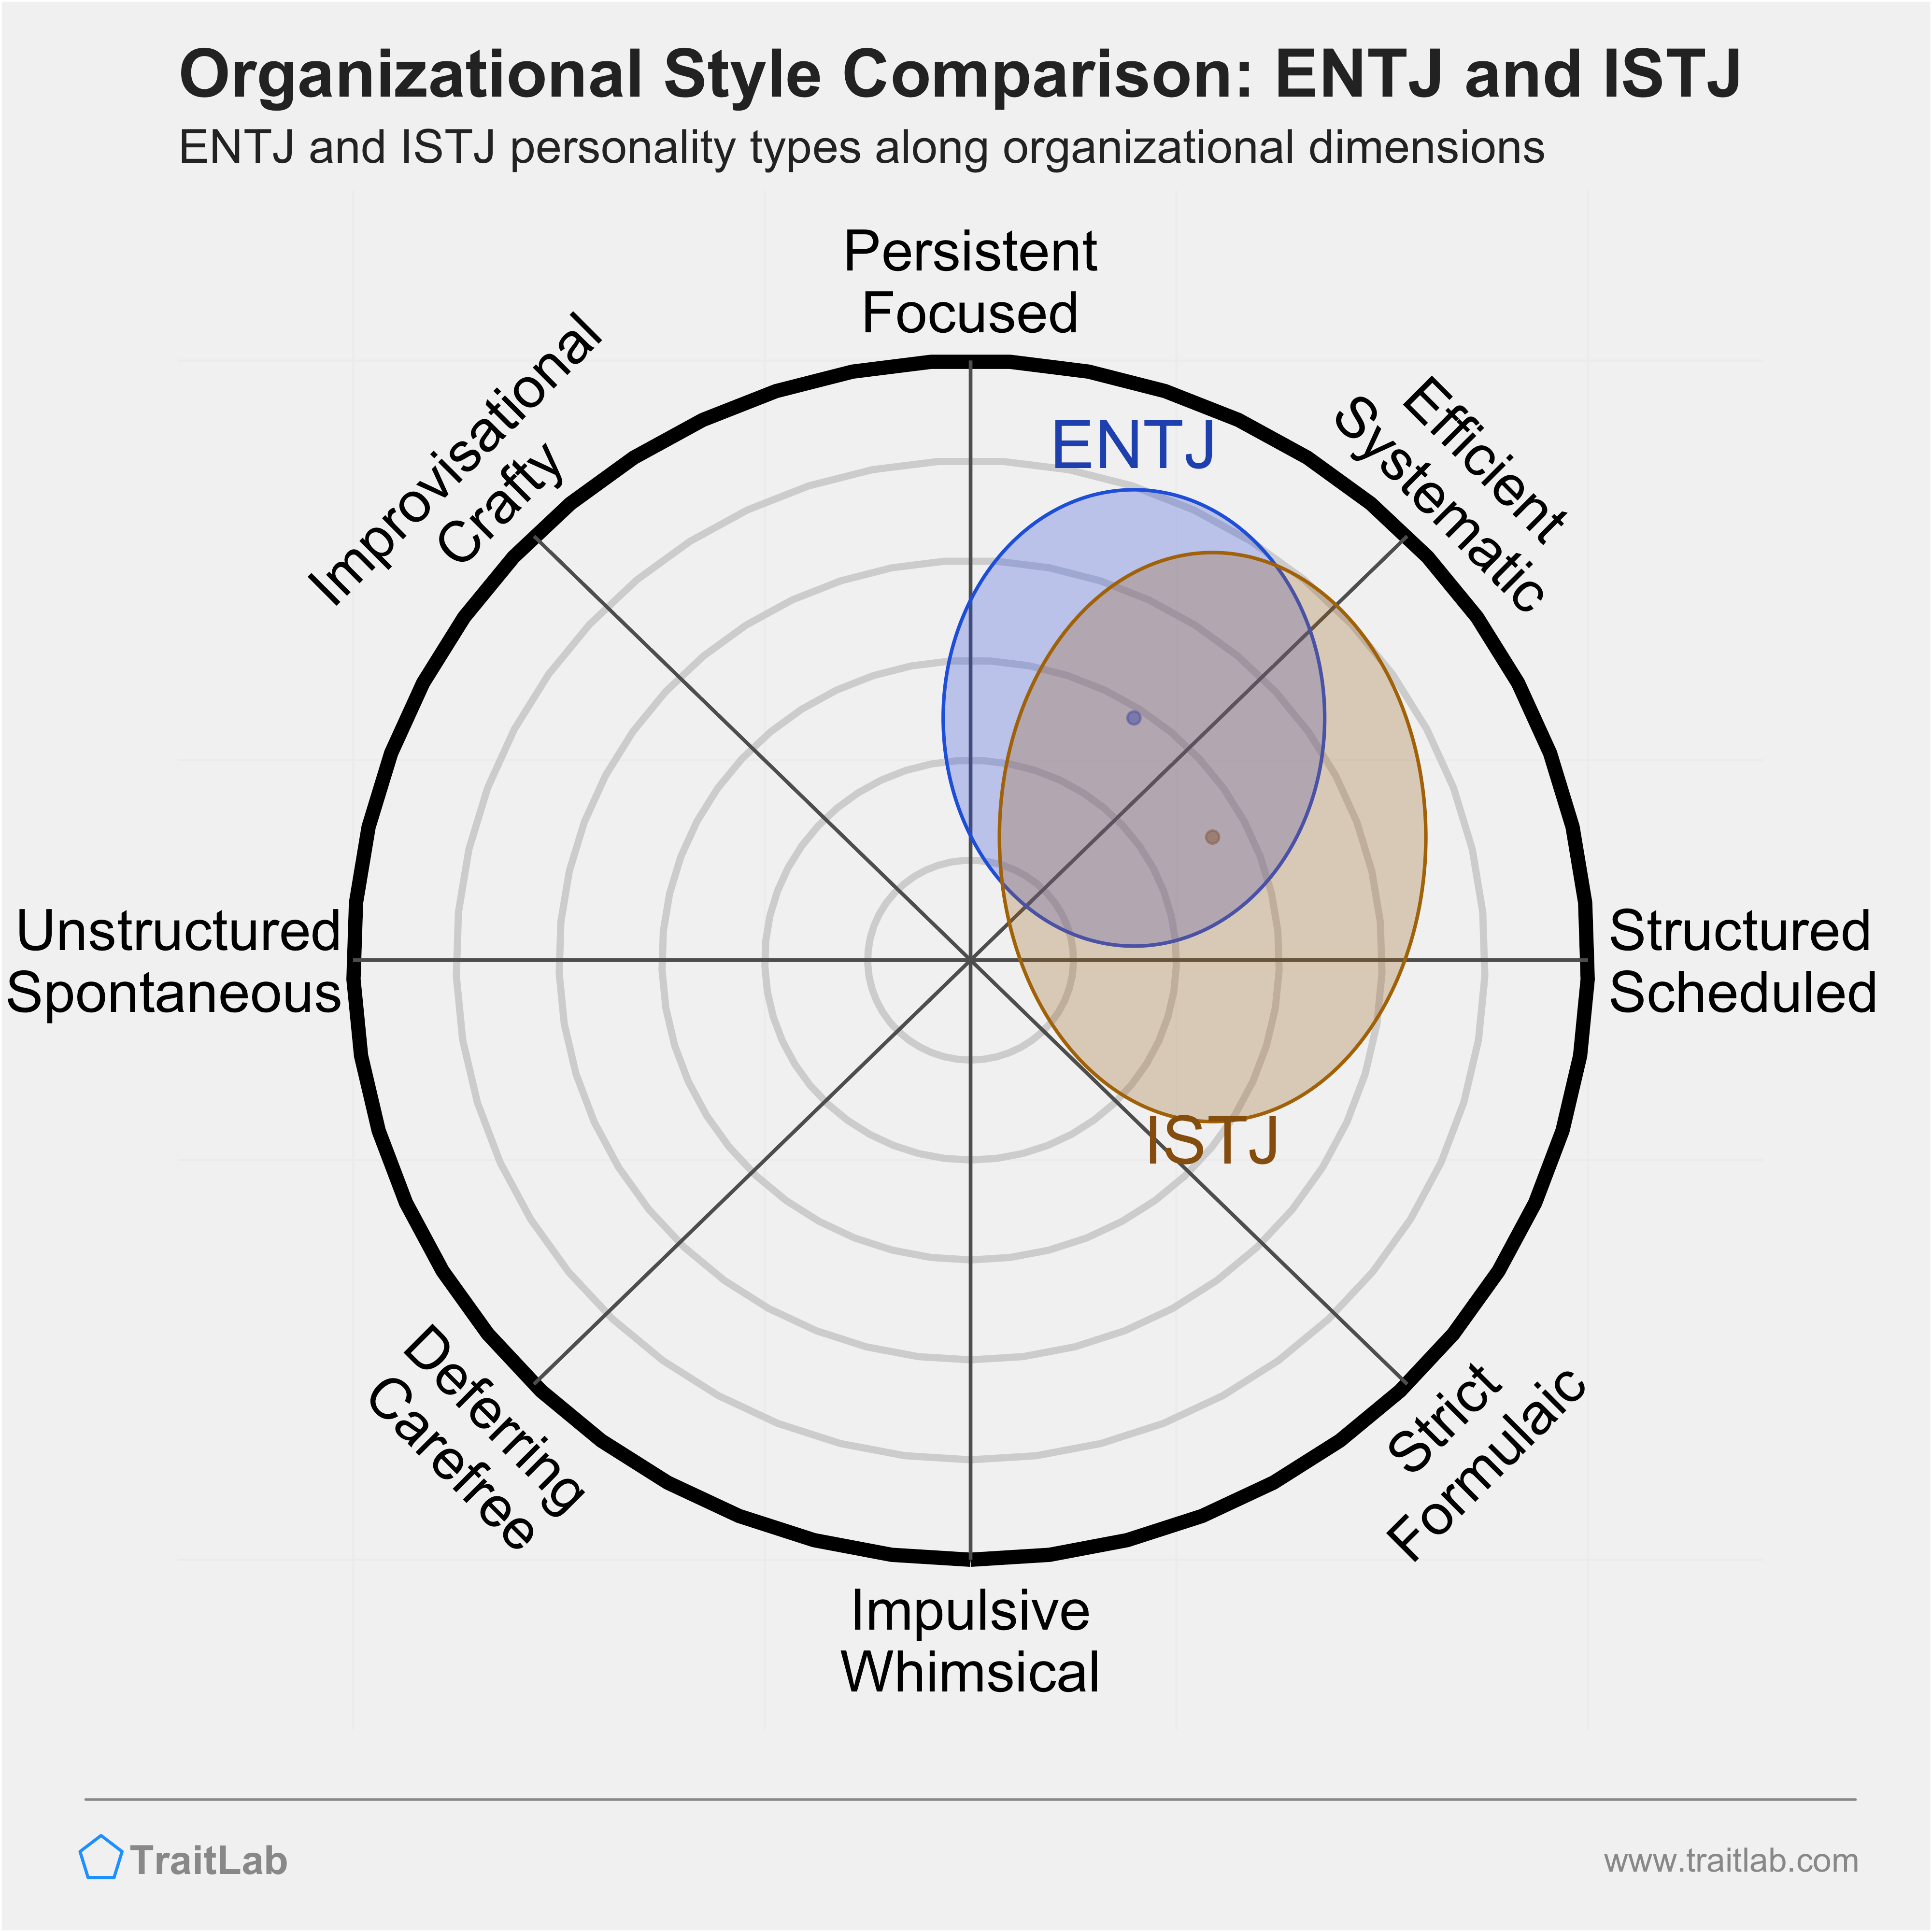 ENTJ and ISTJ comparison across organizational dimensions